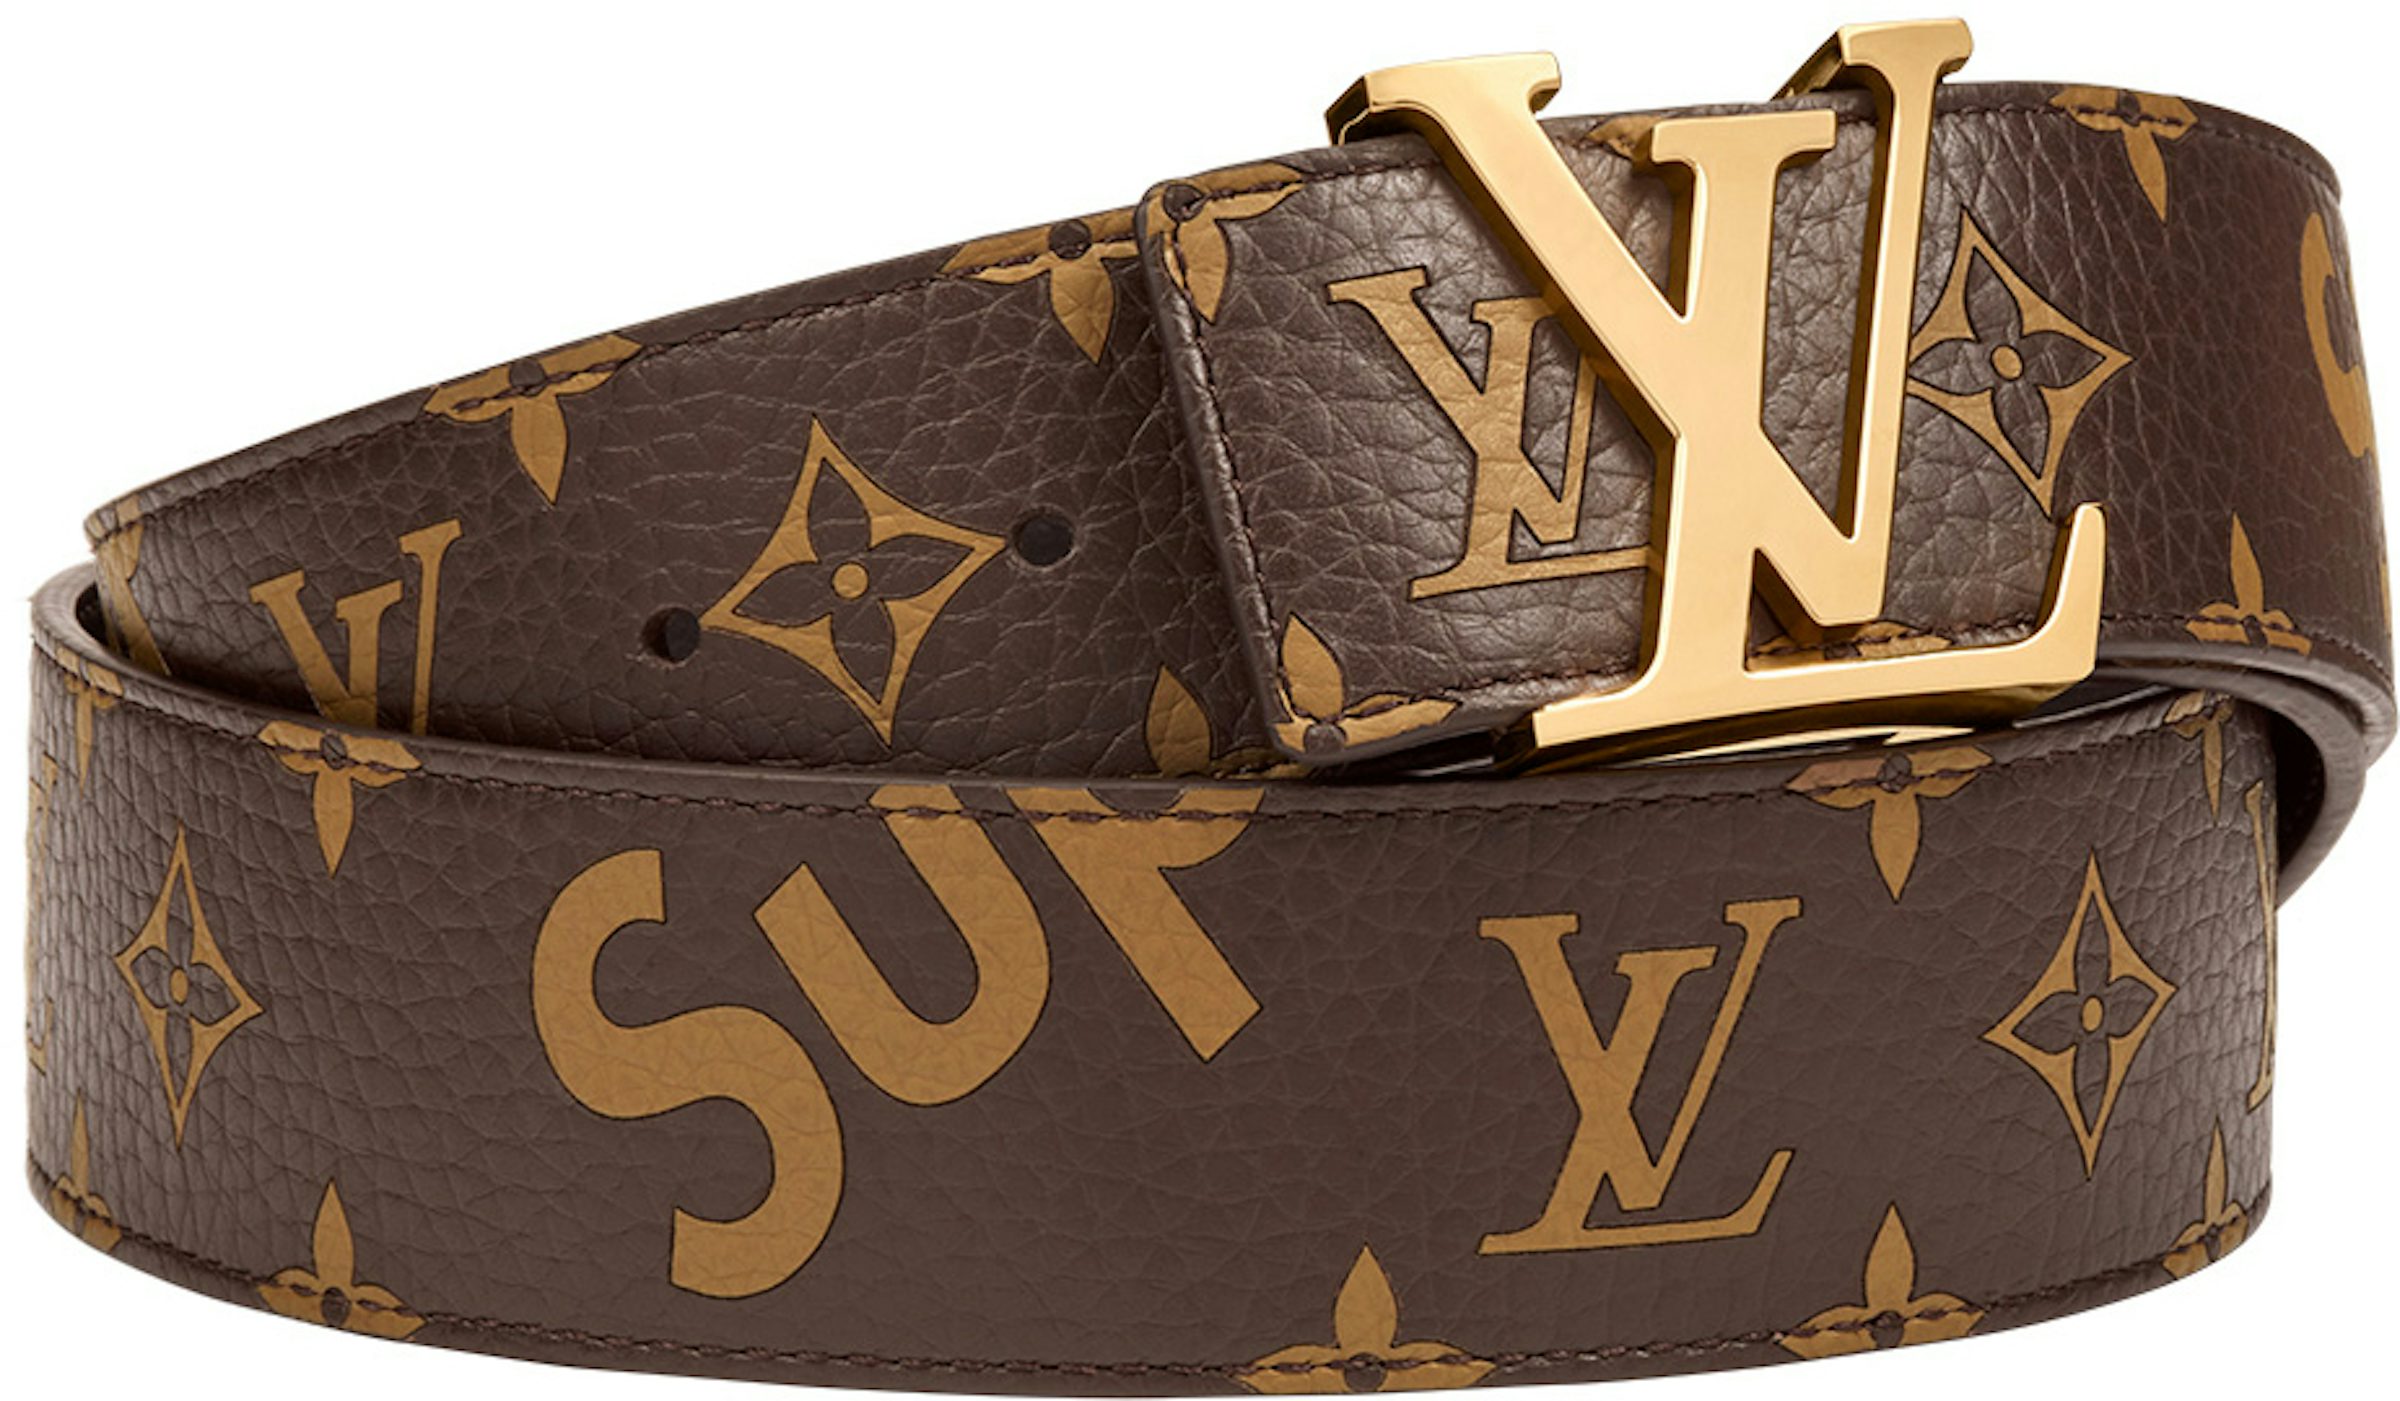 StockX Authenticates the $70,000 Supreme x Louis Vuitton Malle